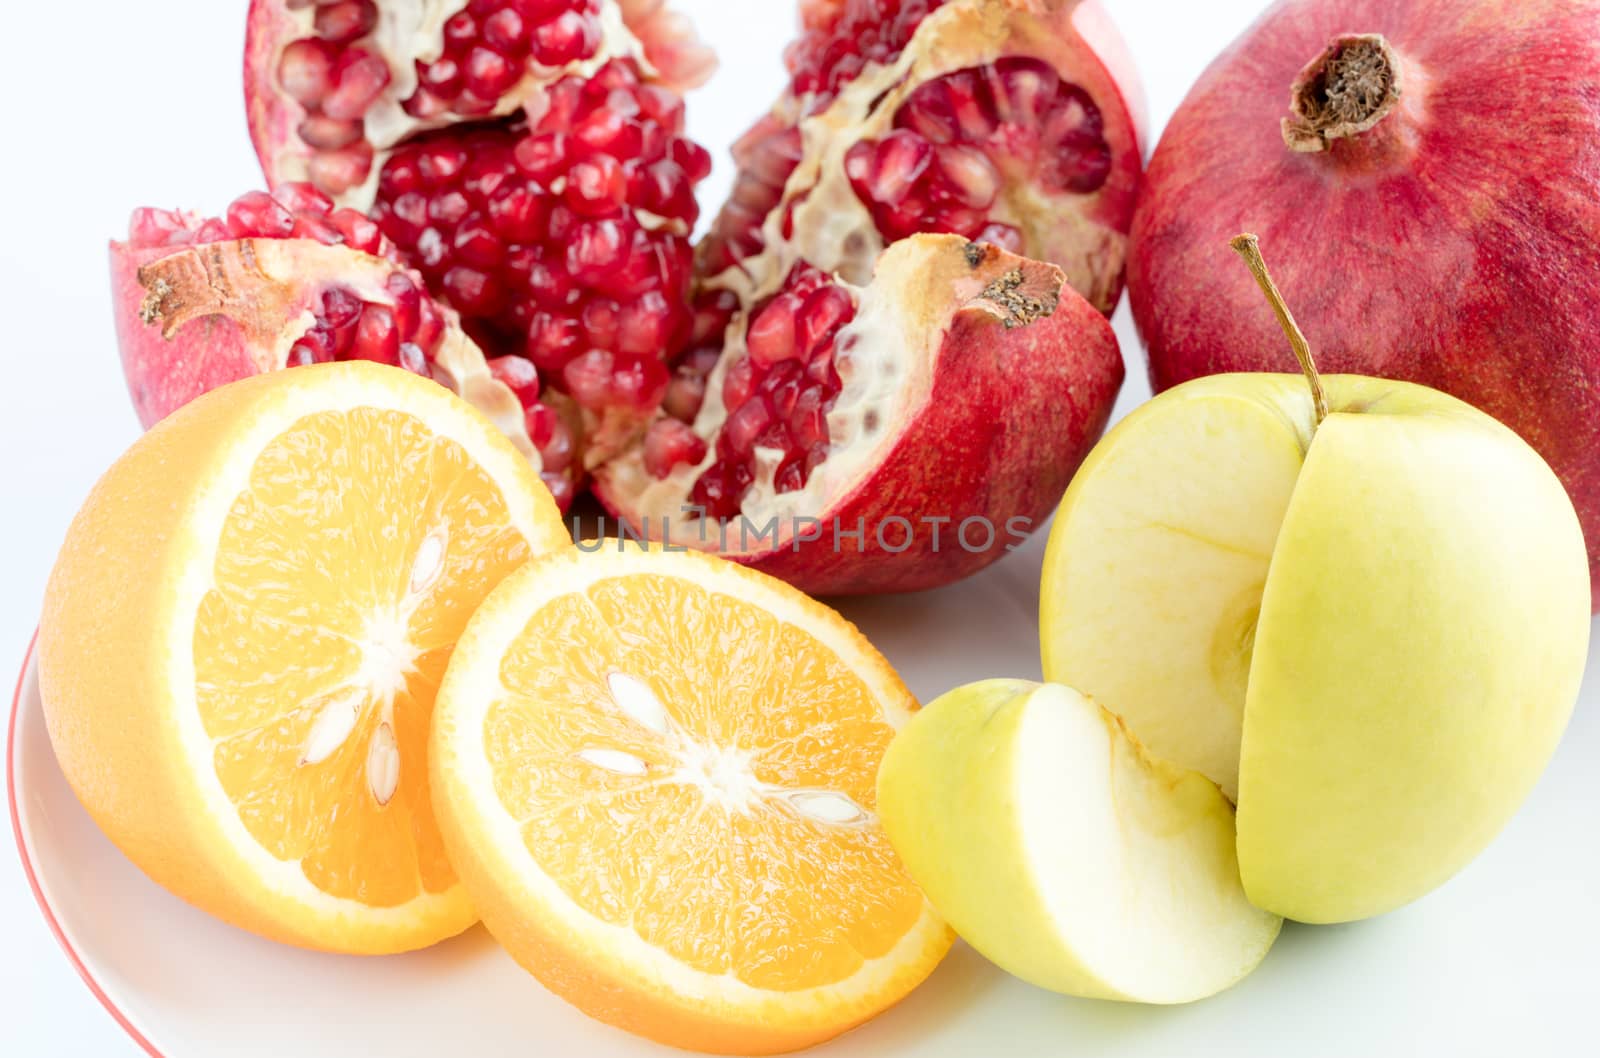 Ripe fruit: pomegranate, orange, apple, sliced on a white background close-ups 